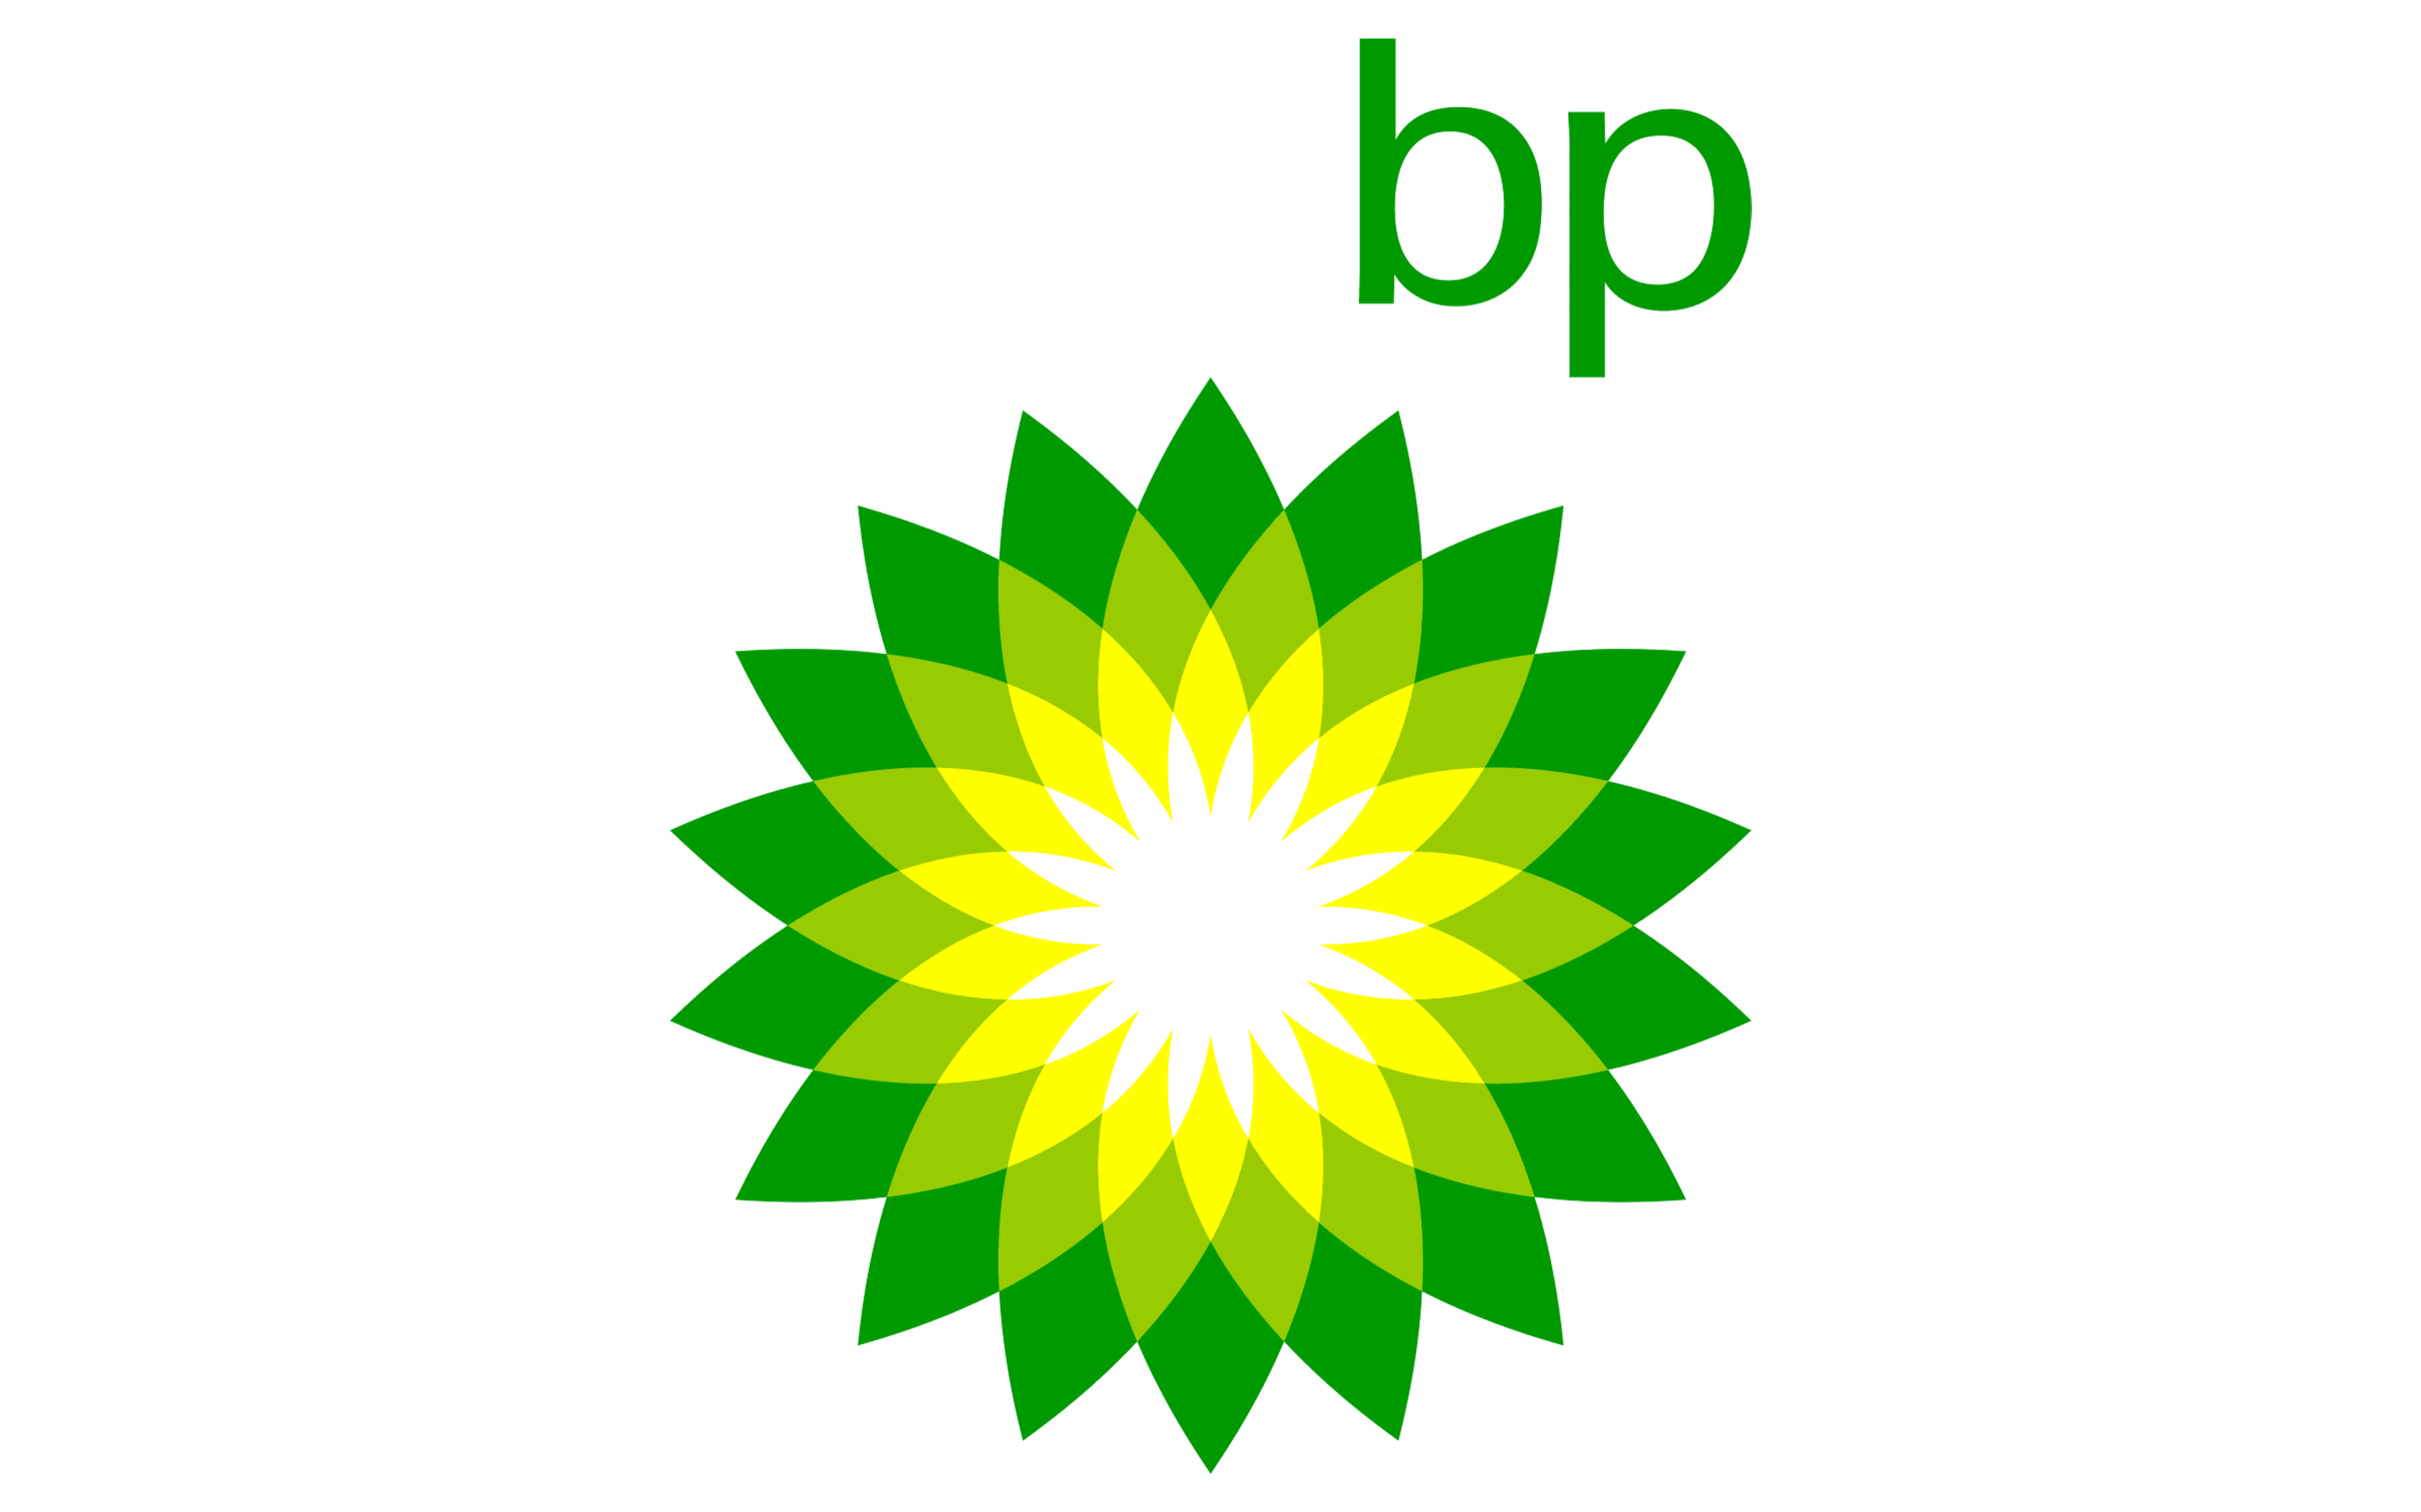 Bp Is A British Petroleum Company